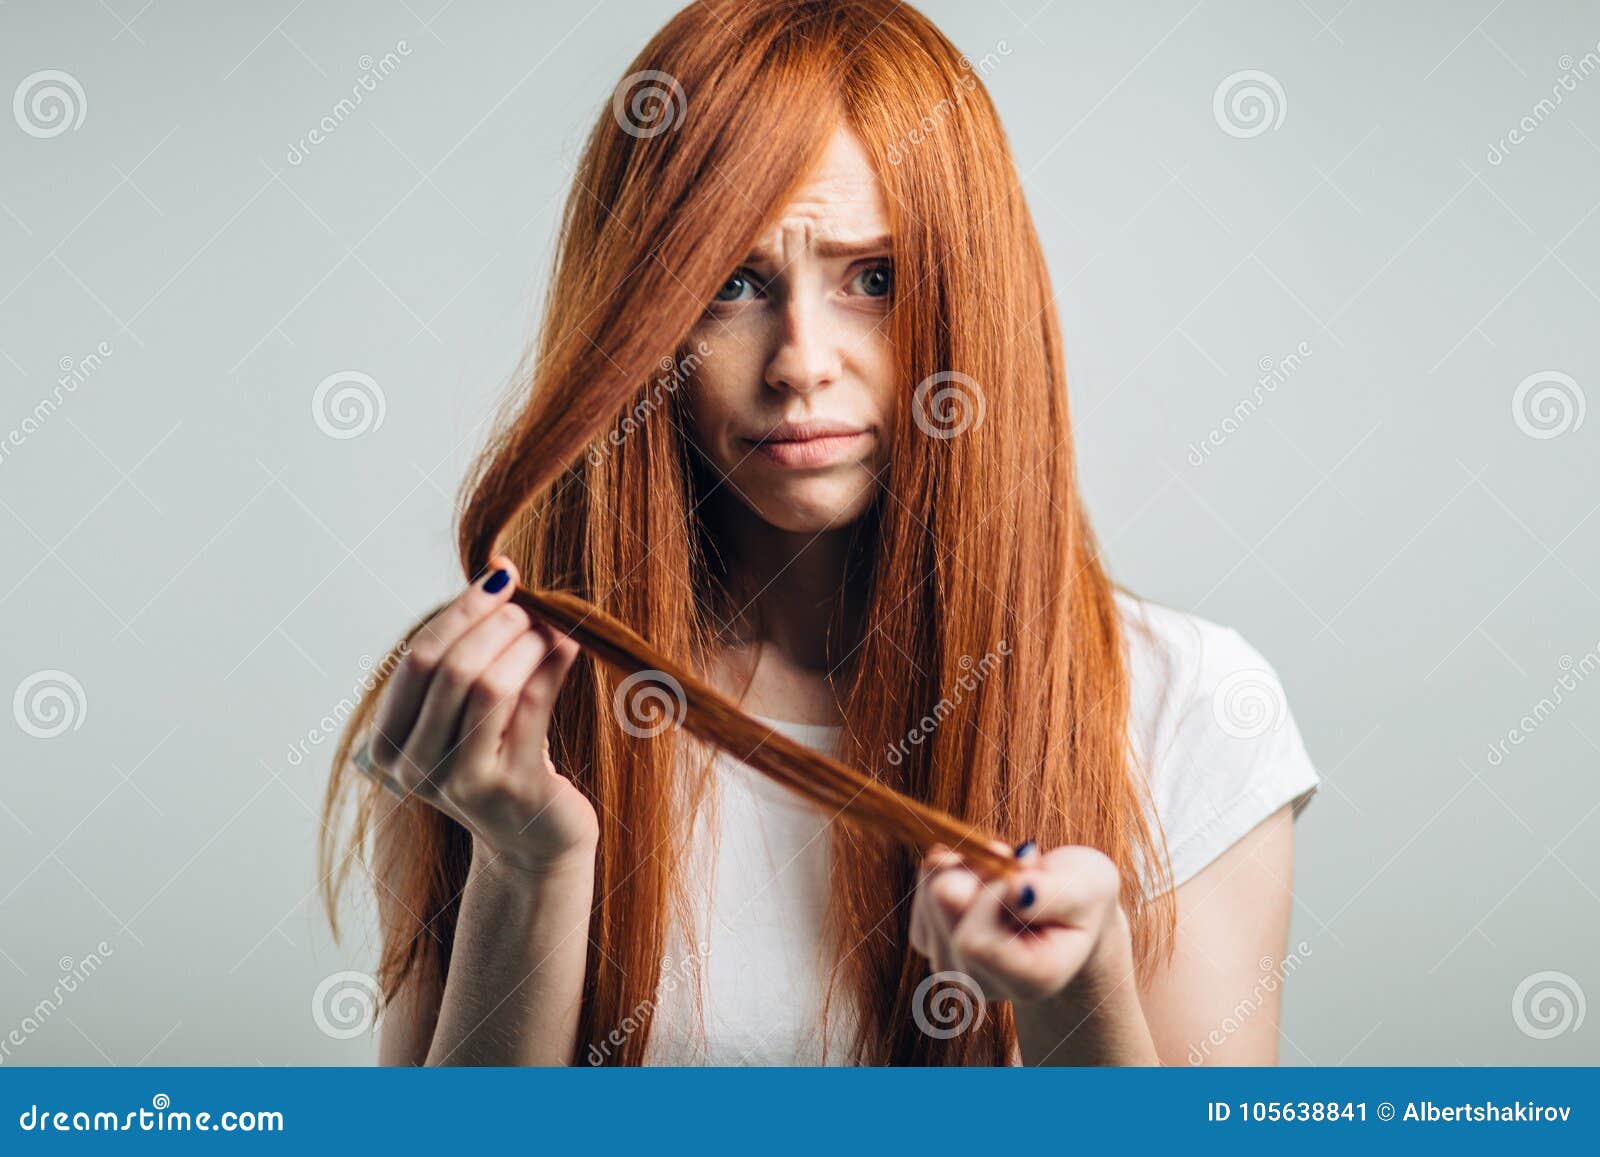 Sad Redhead Girl Holding Her Damaged Hair Looking At Camera Stock